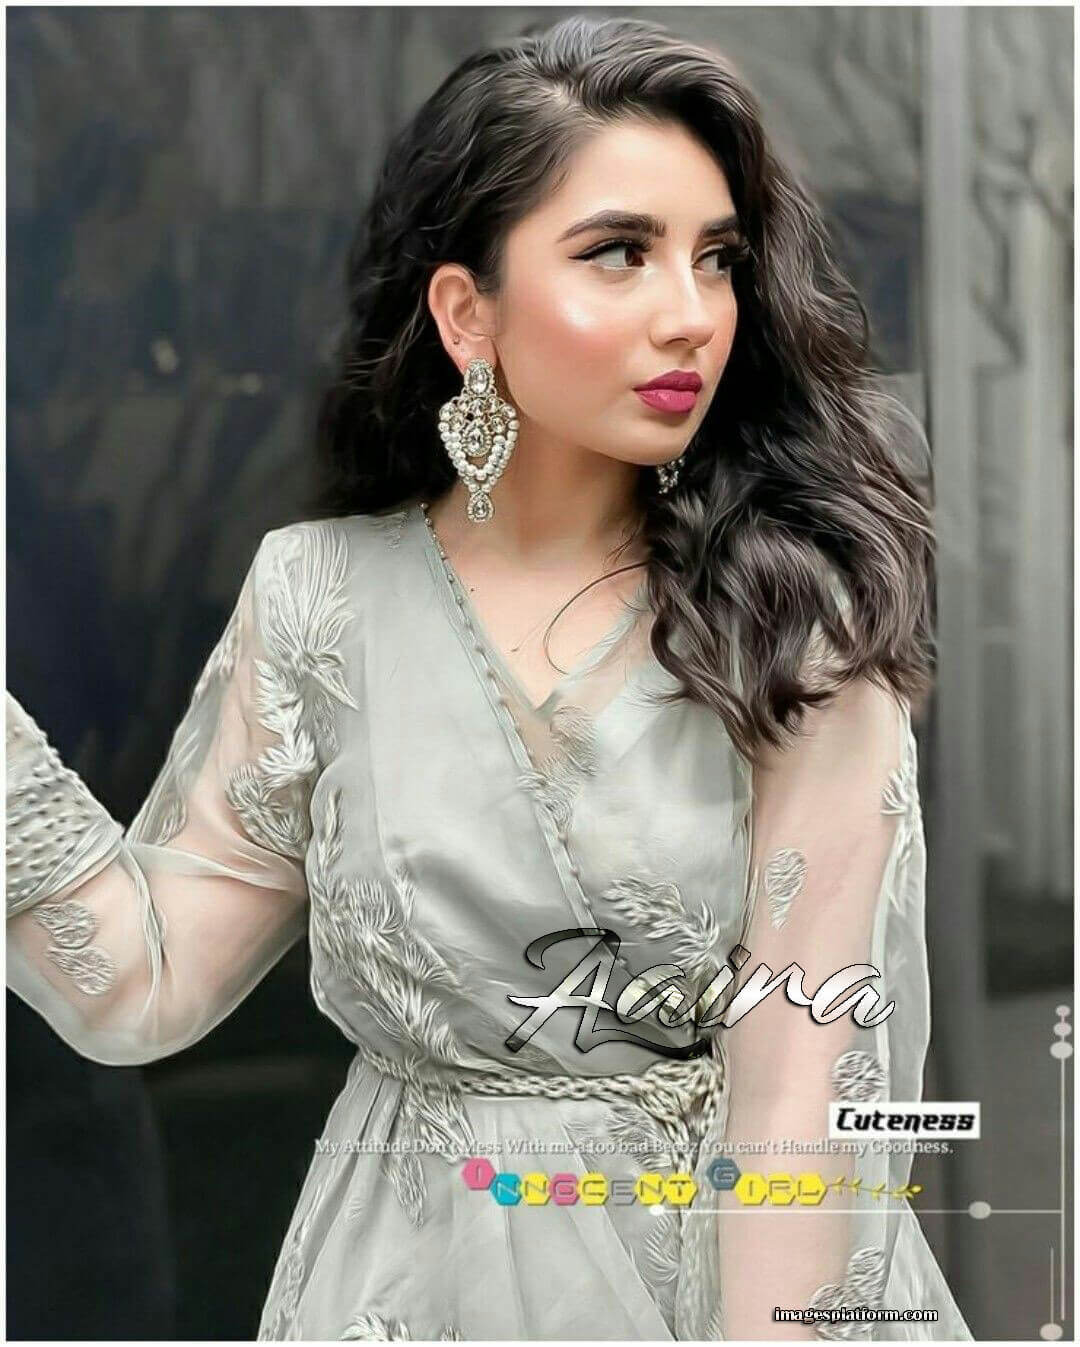 Stylish Fashion Girl Aaira Name HD Wallpaper And Dp